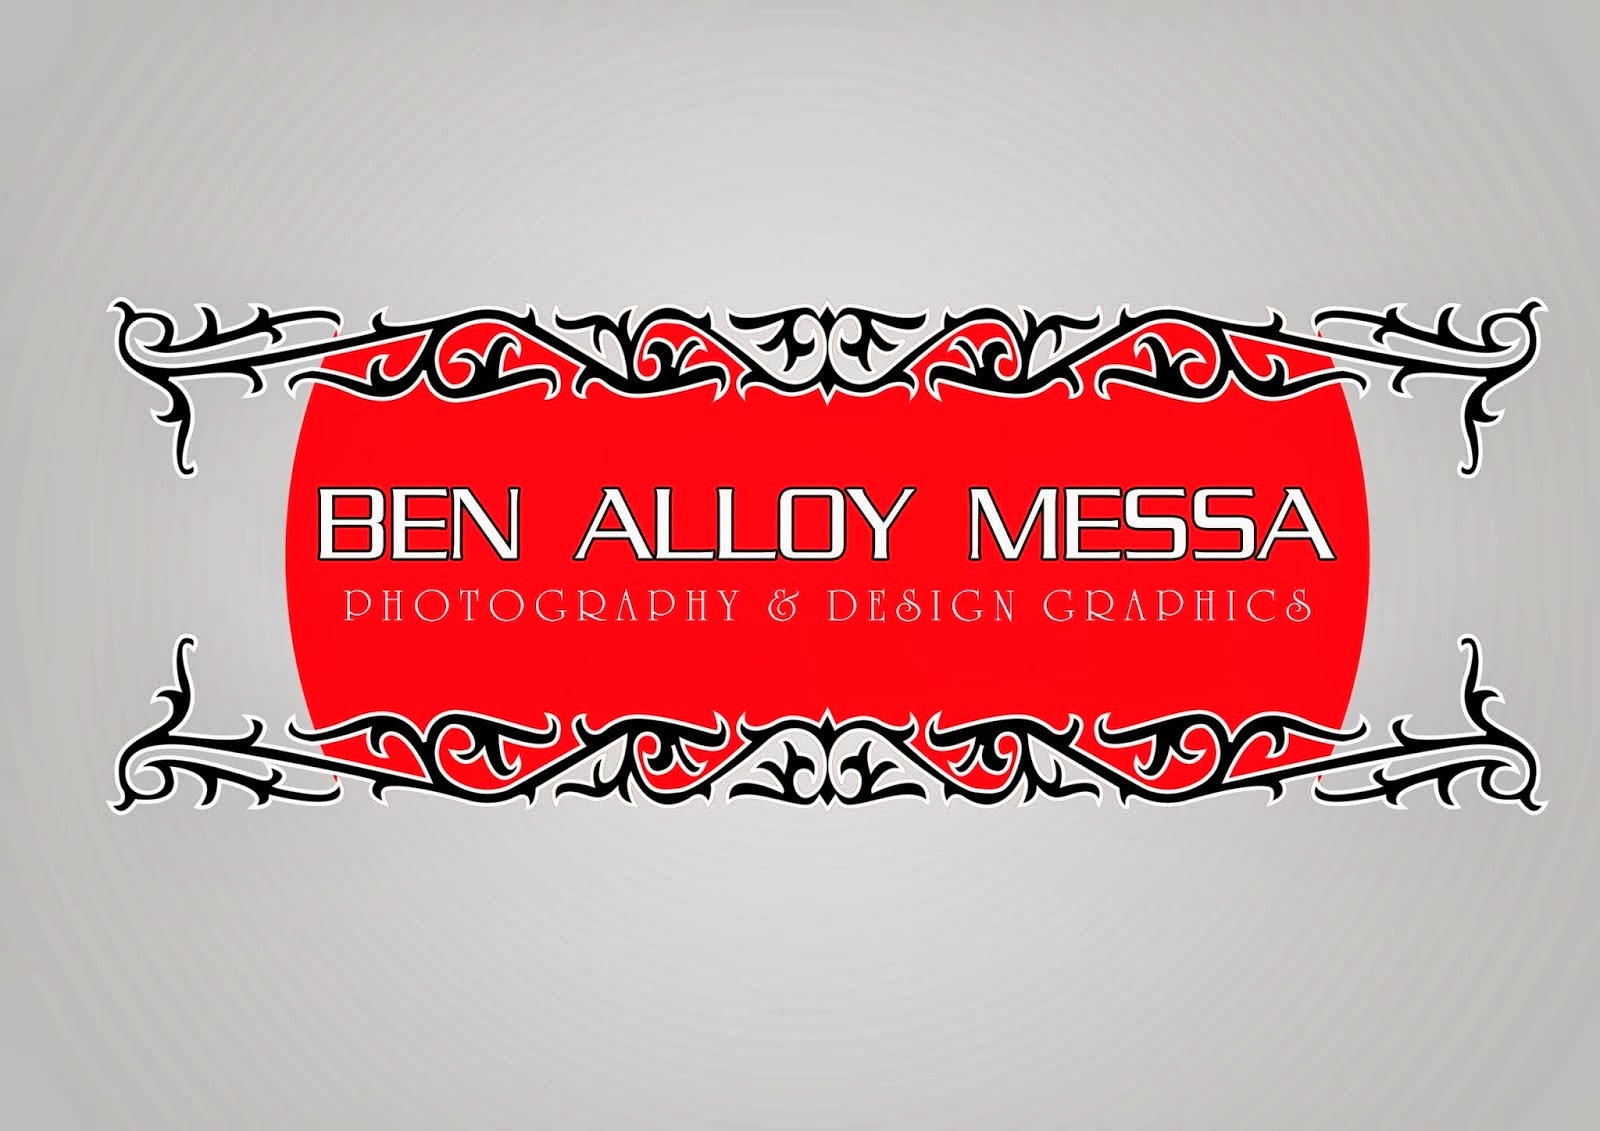 Ben Alloy Messa